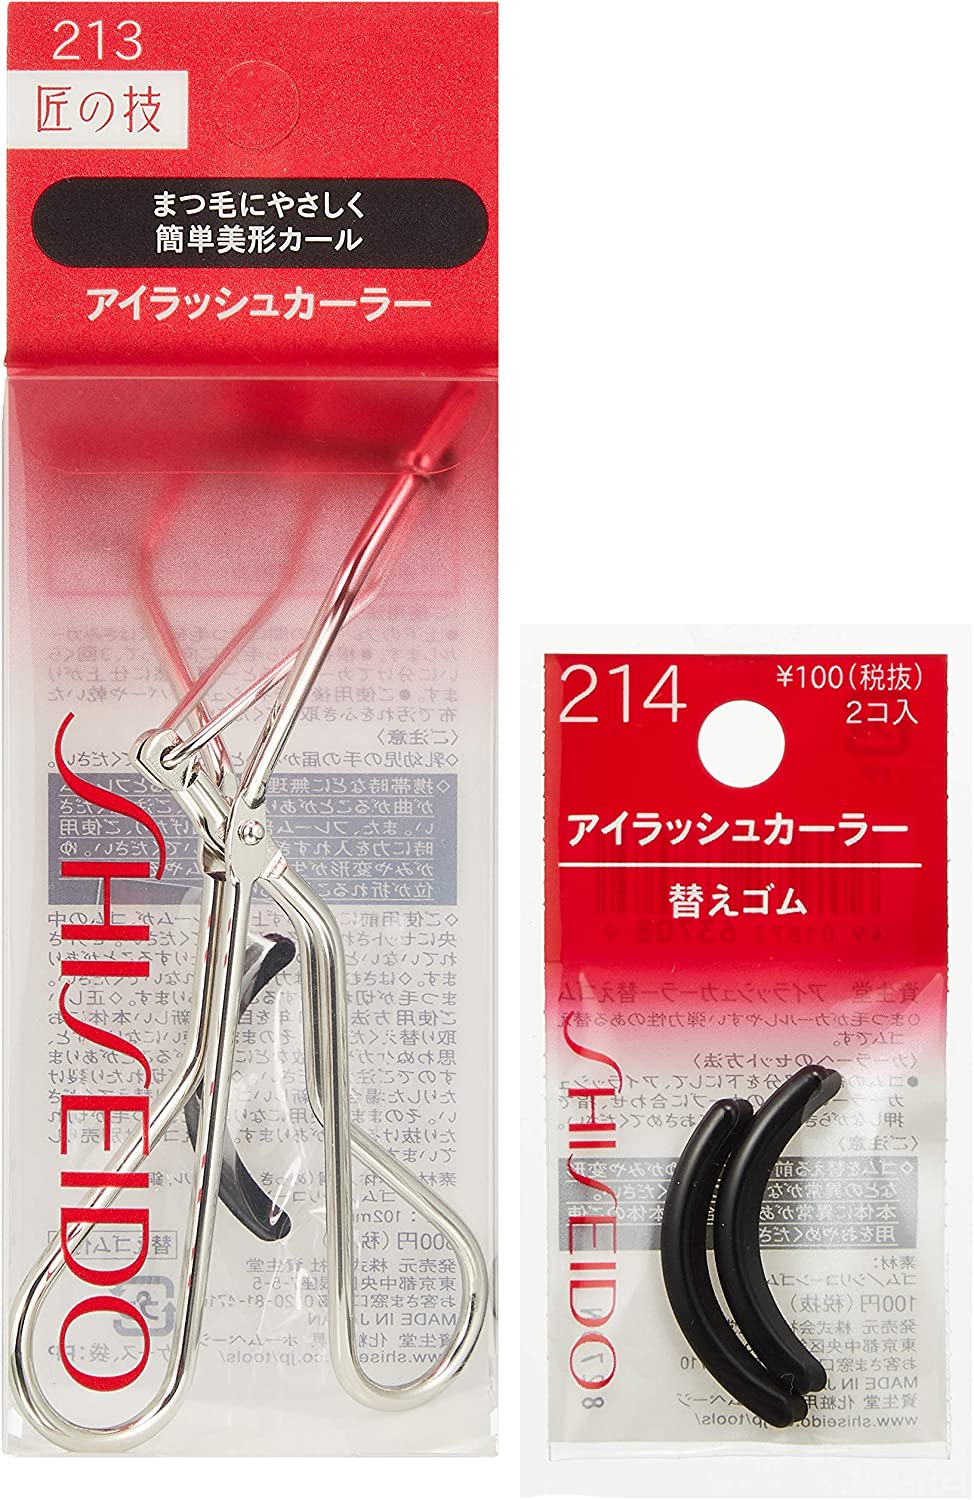 Shiseido Eyelash Curler 213 + 214